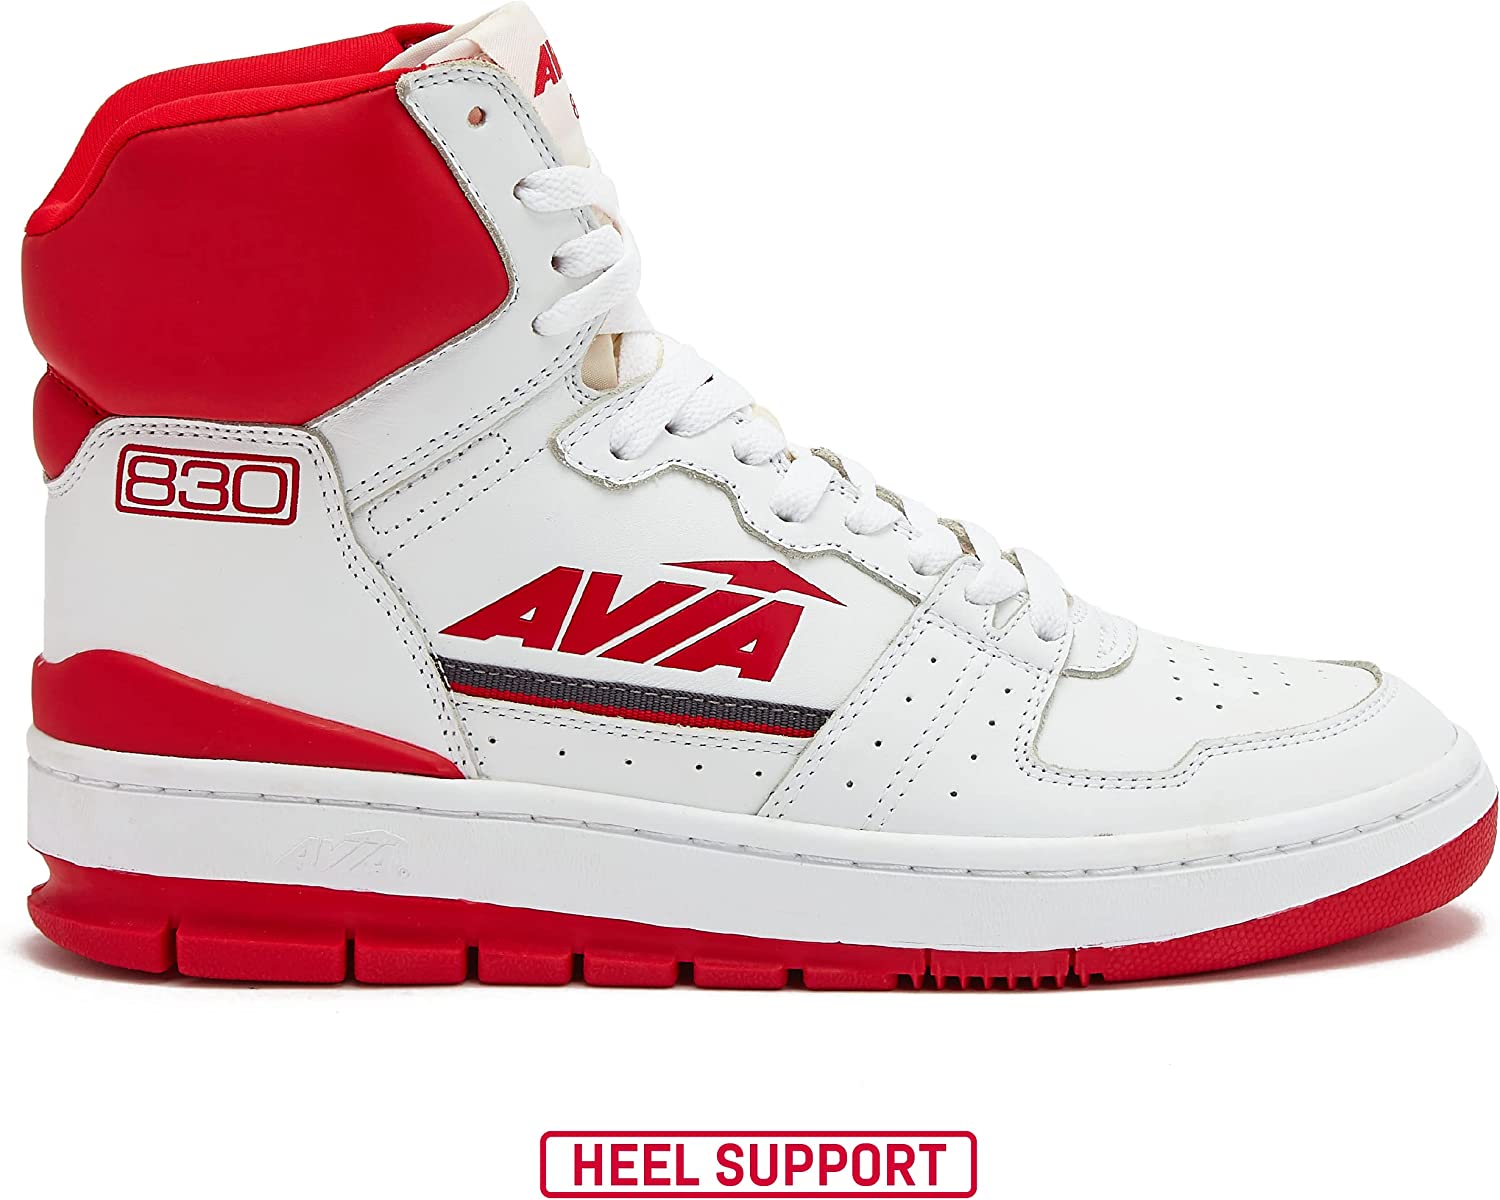 Avia 830 Men's Basketball Shoes, Retro Sneakers for Indoor or Outdoor, –  burtfit